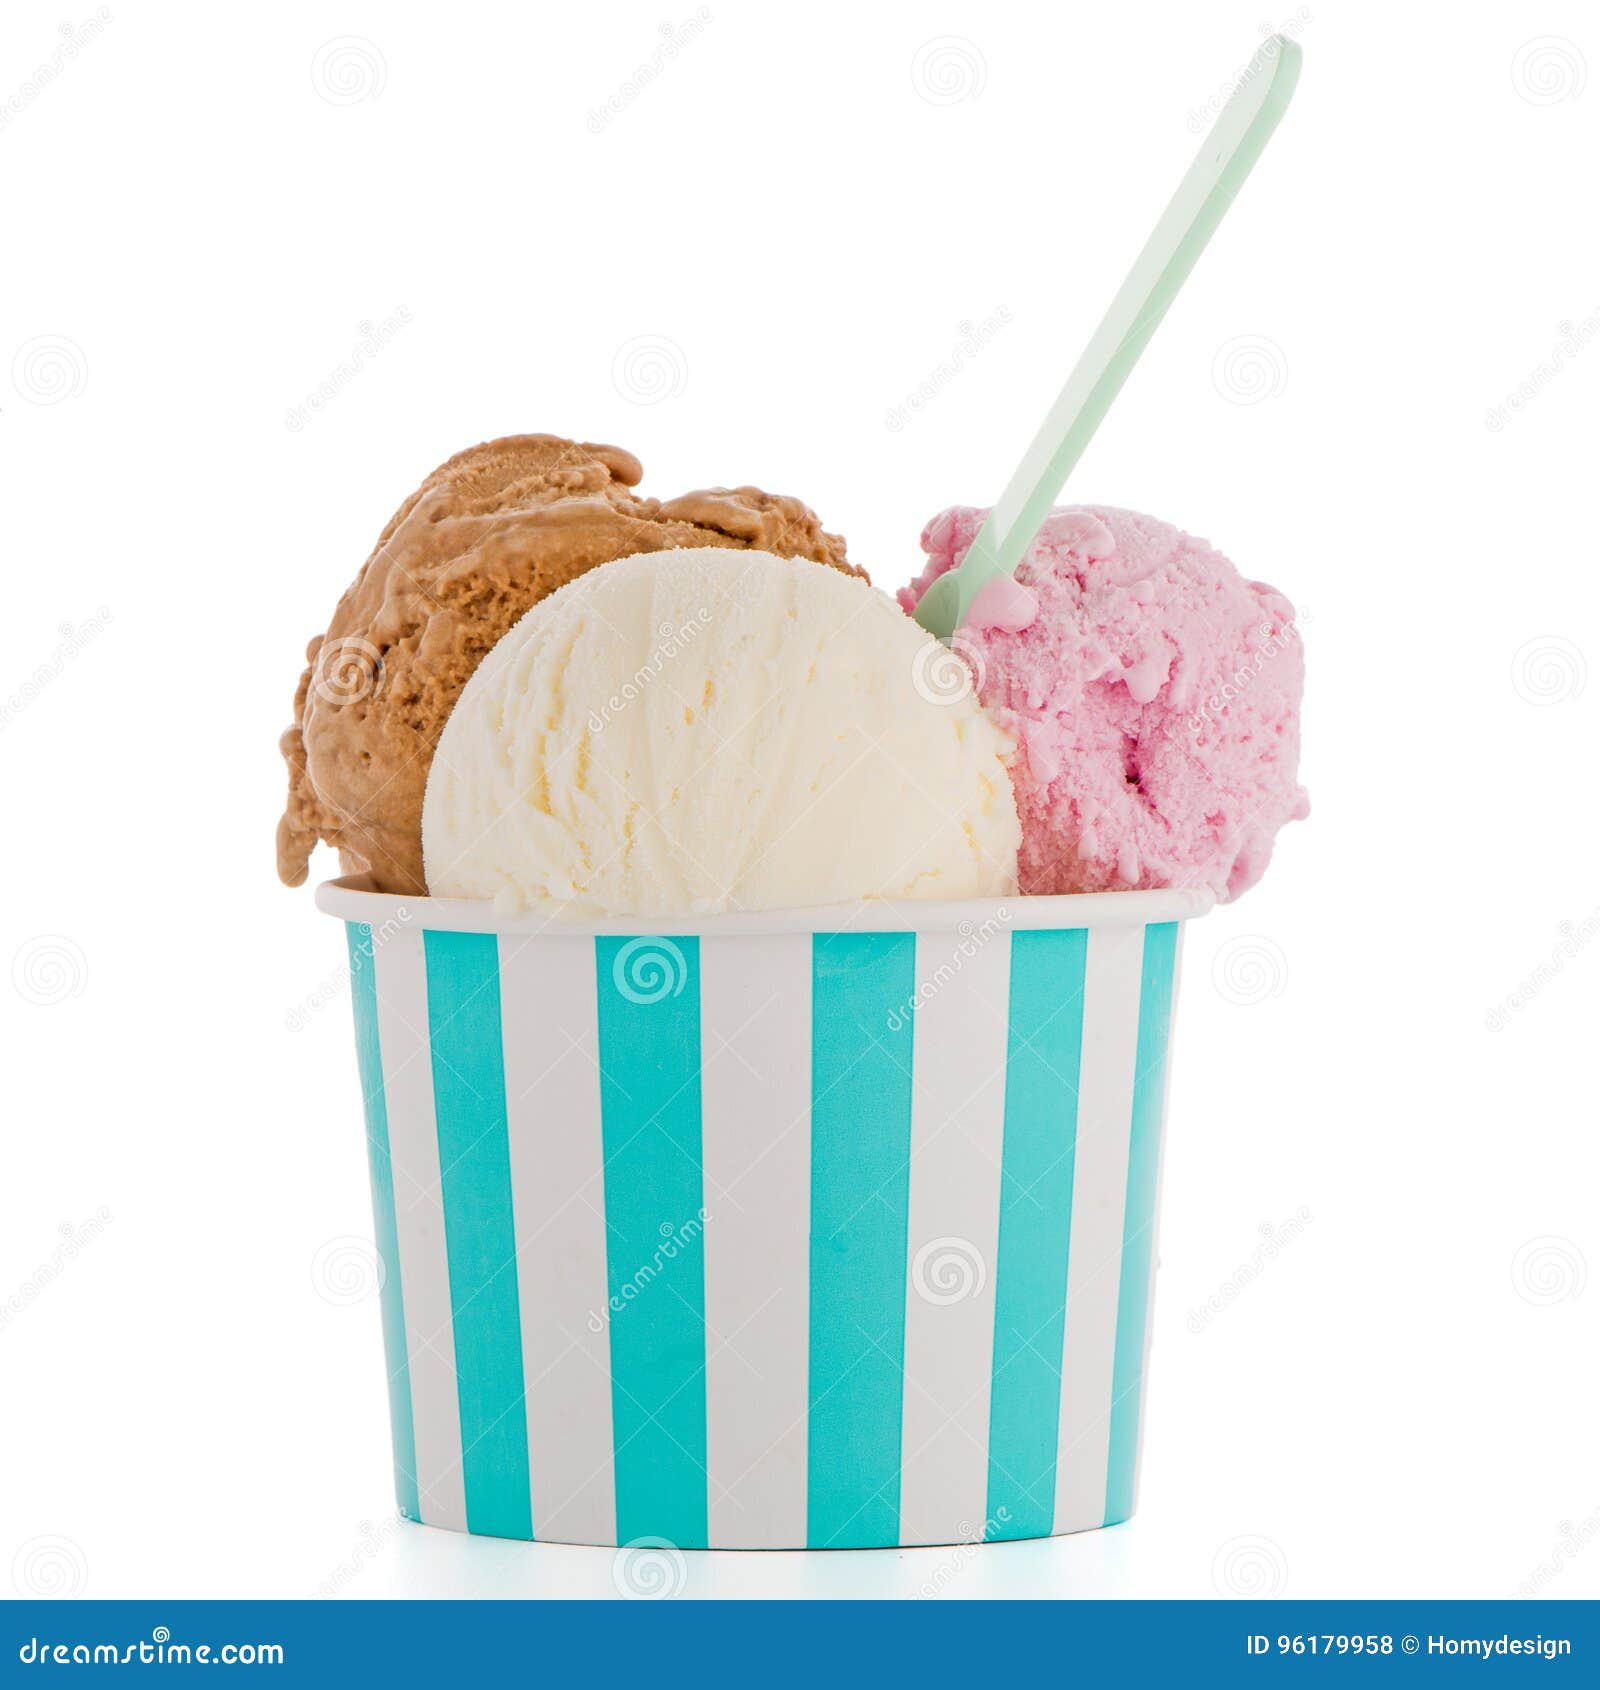 ice cream scoop in paper cup